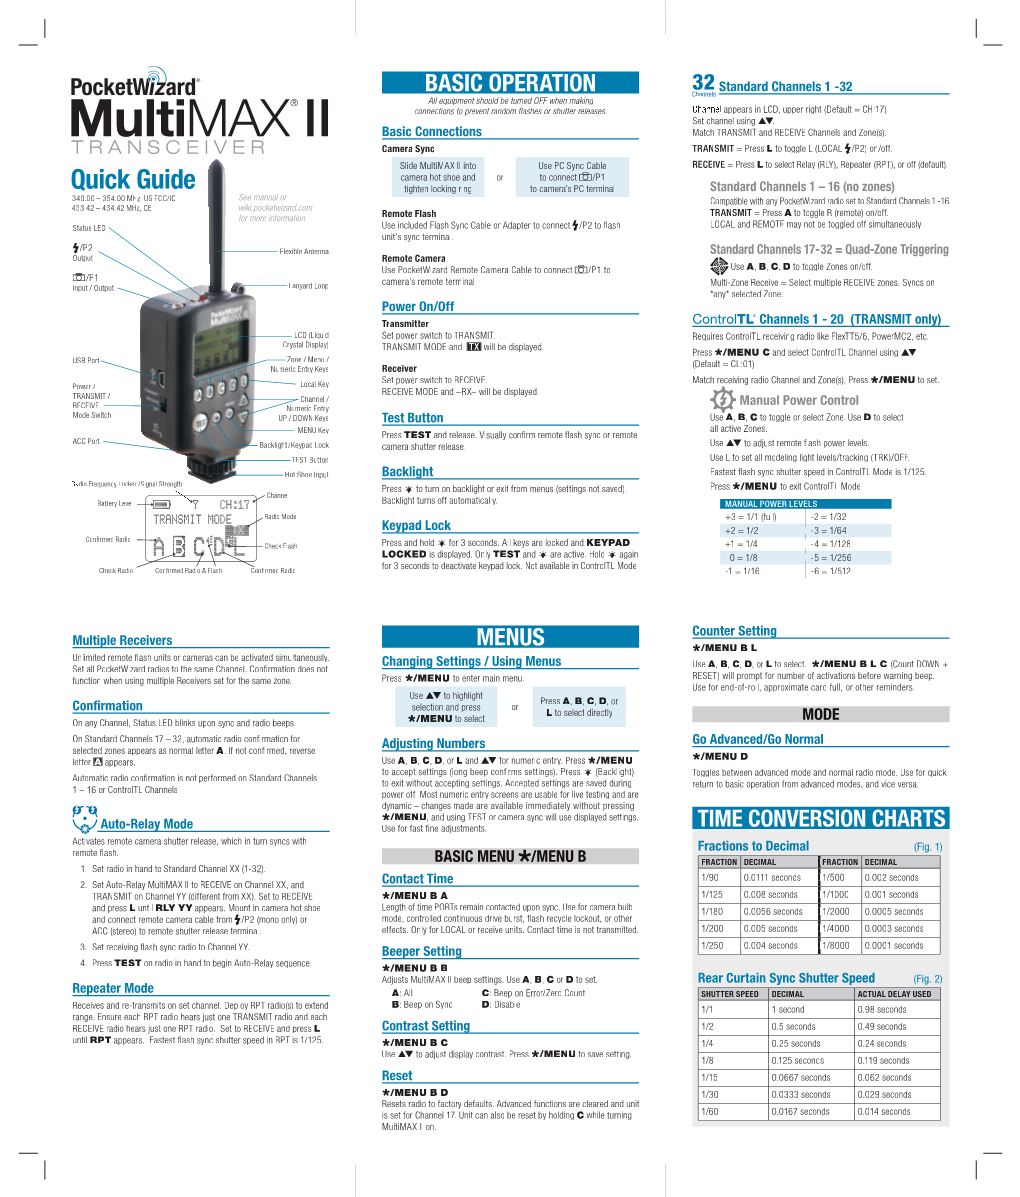 Multimax II Quick Guide